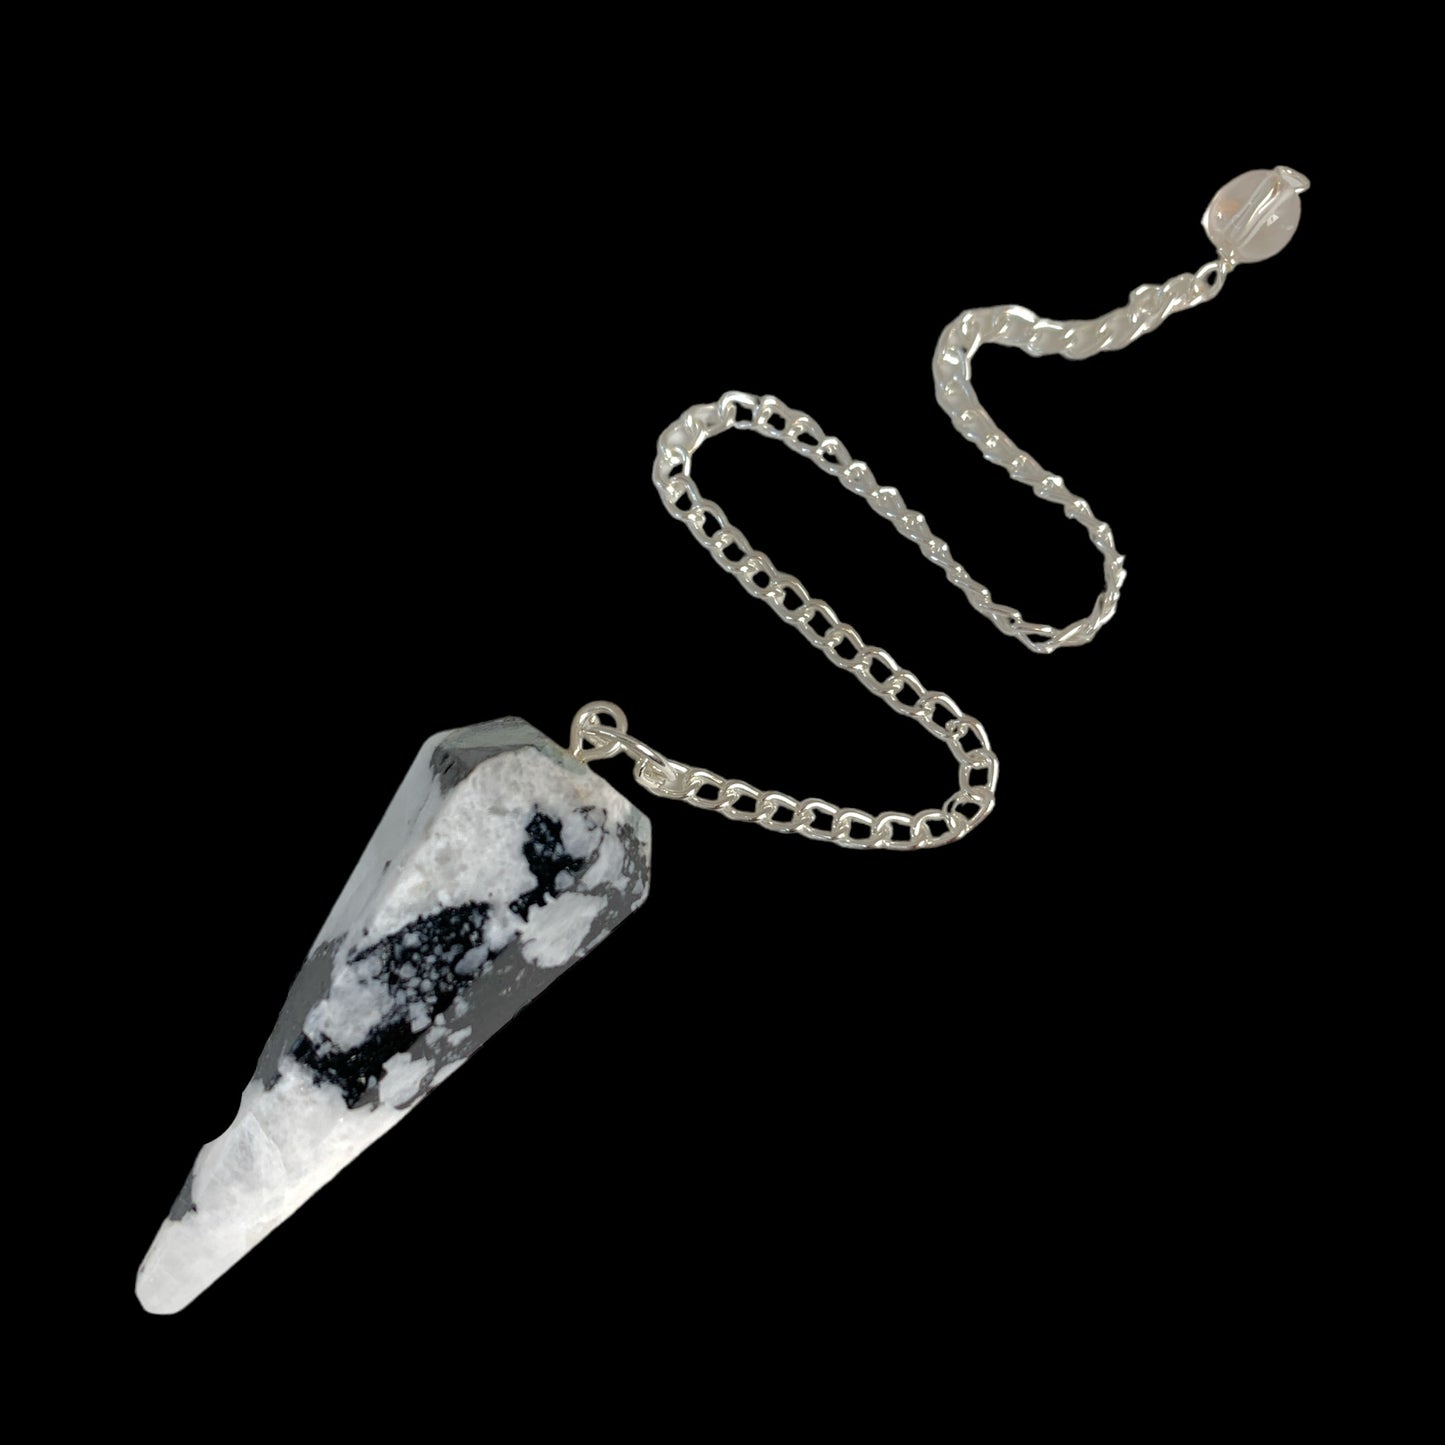 Rainbow Moonstone 12 Facet Pendulum with Chain - 35-45mm 20g - NEW422